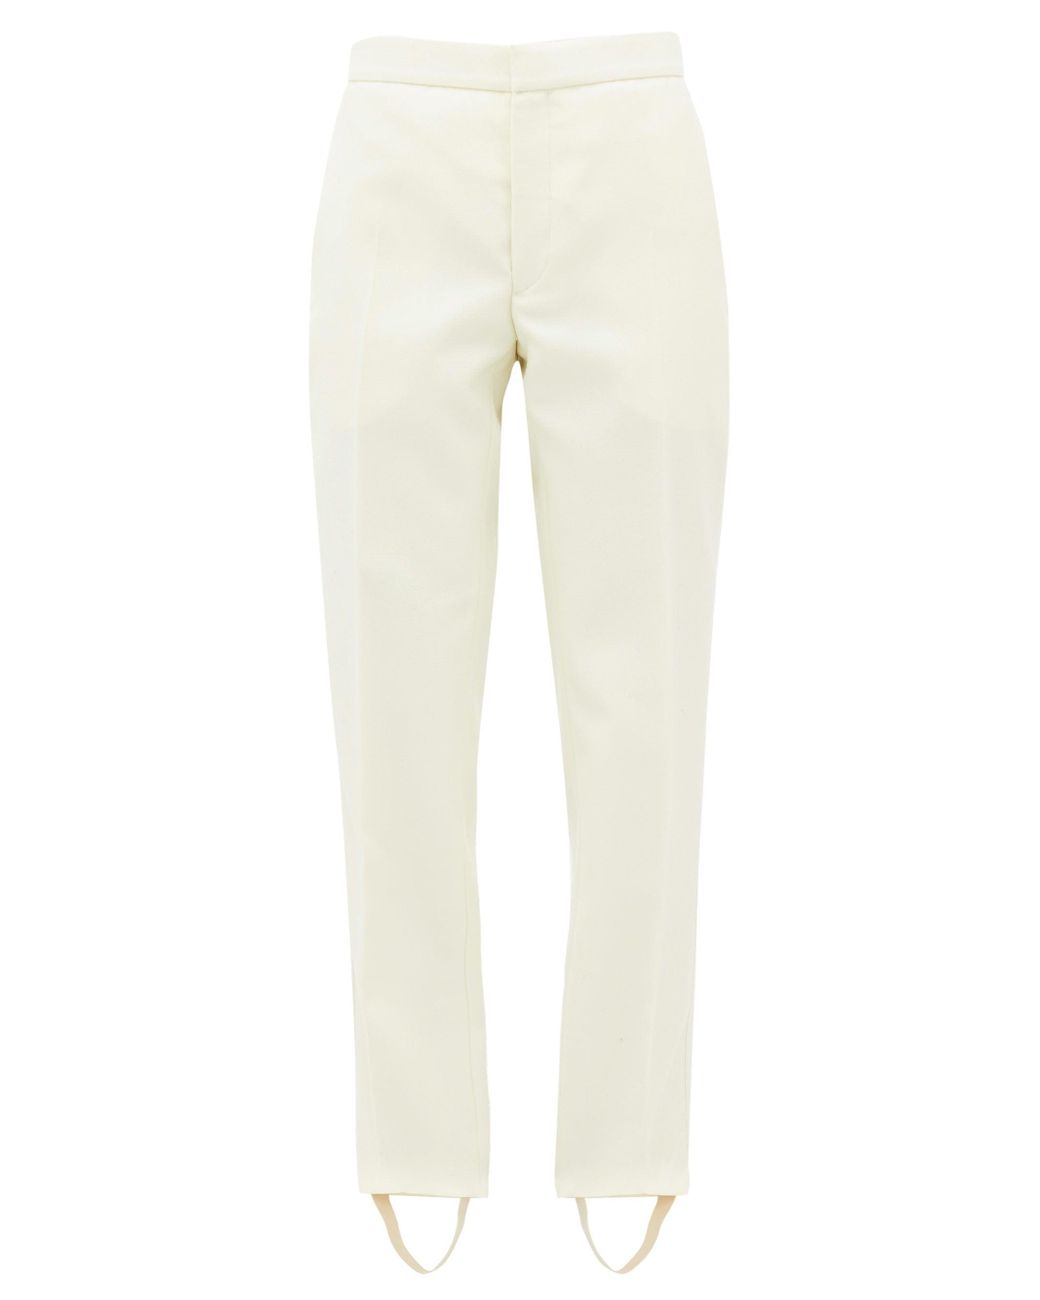 WARDROBE.NYC Release 05 Stirrup Merino-wool Trousers in White - Lyst